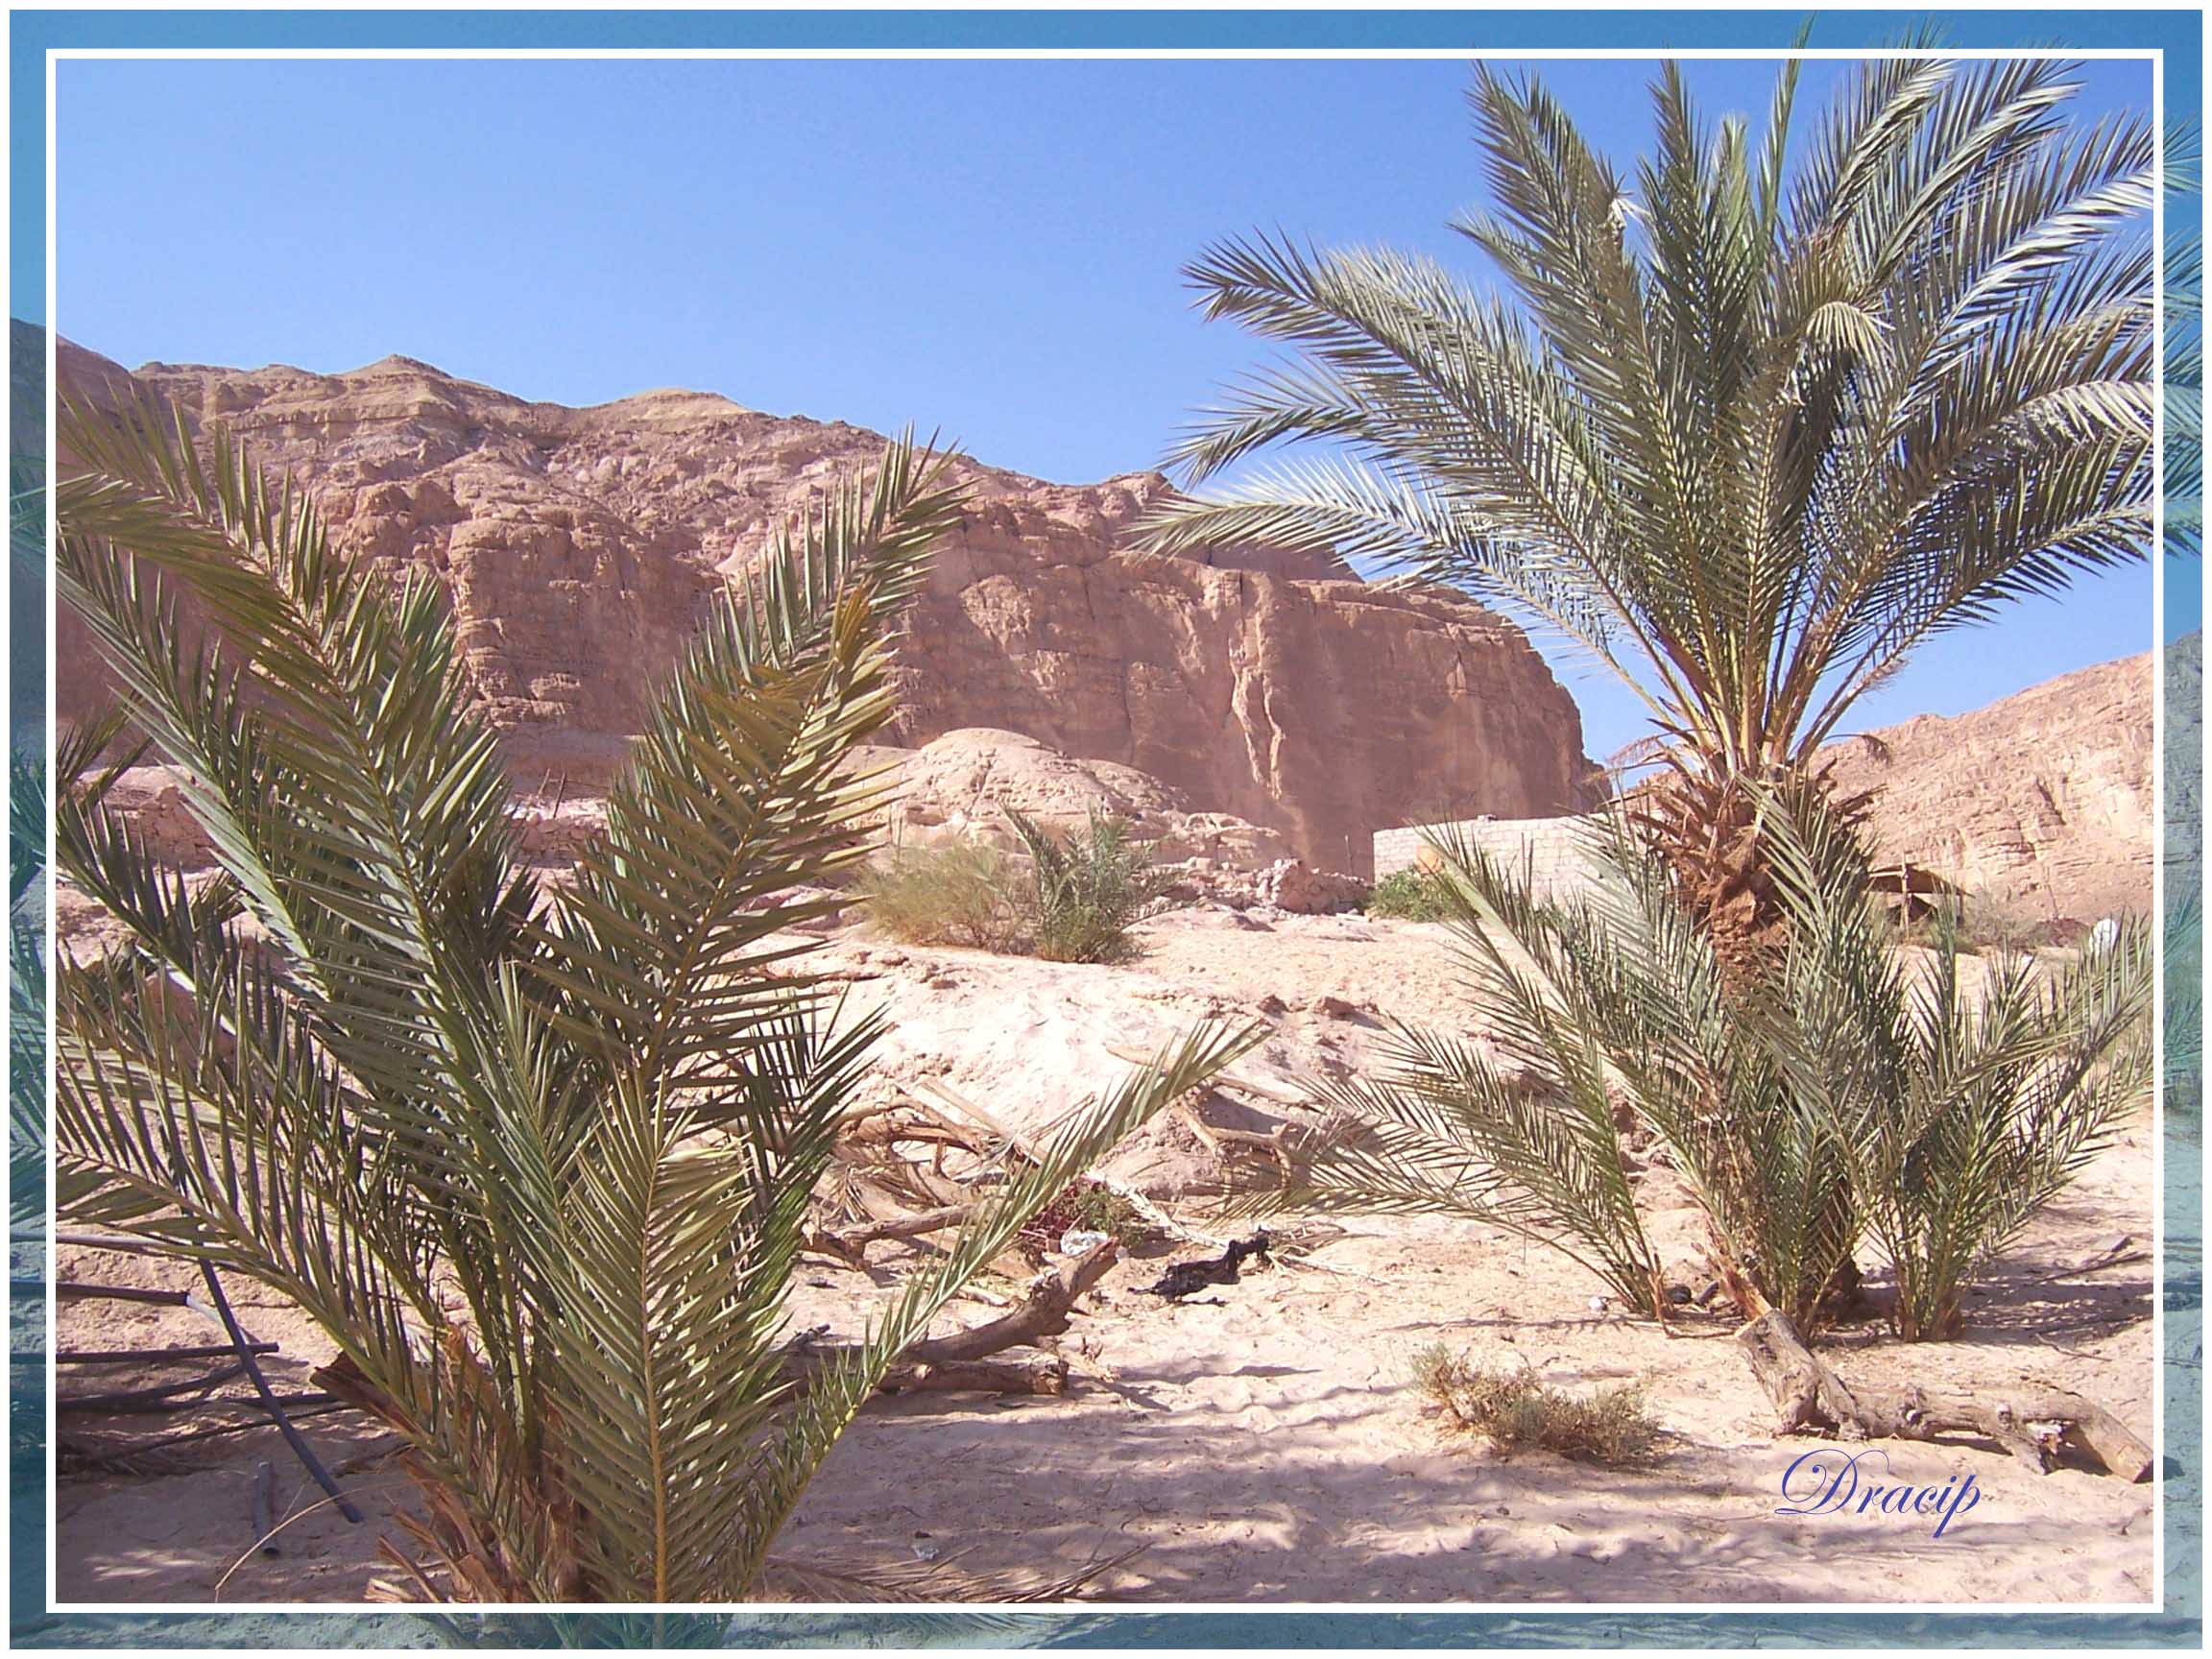 Sinaï Egyptien-Dracip-Reproduction interdite.